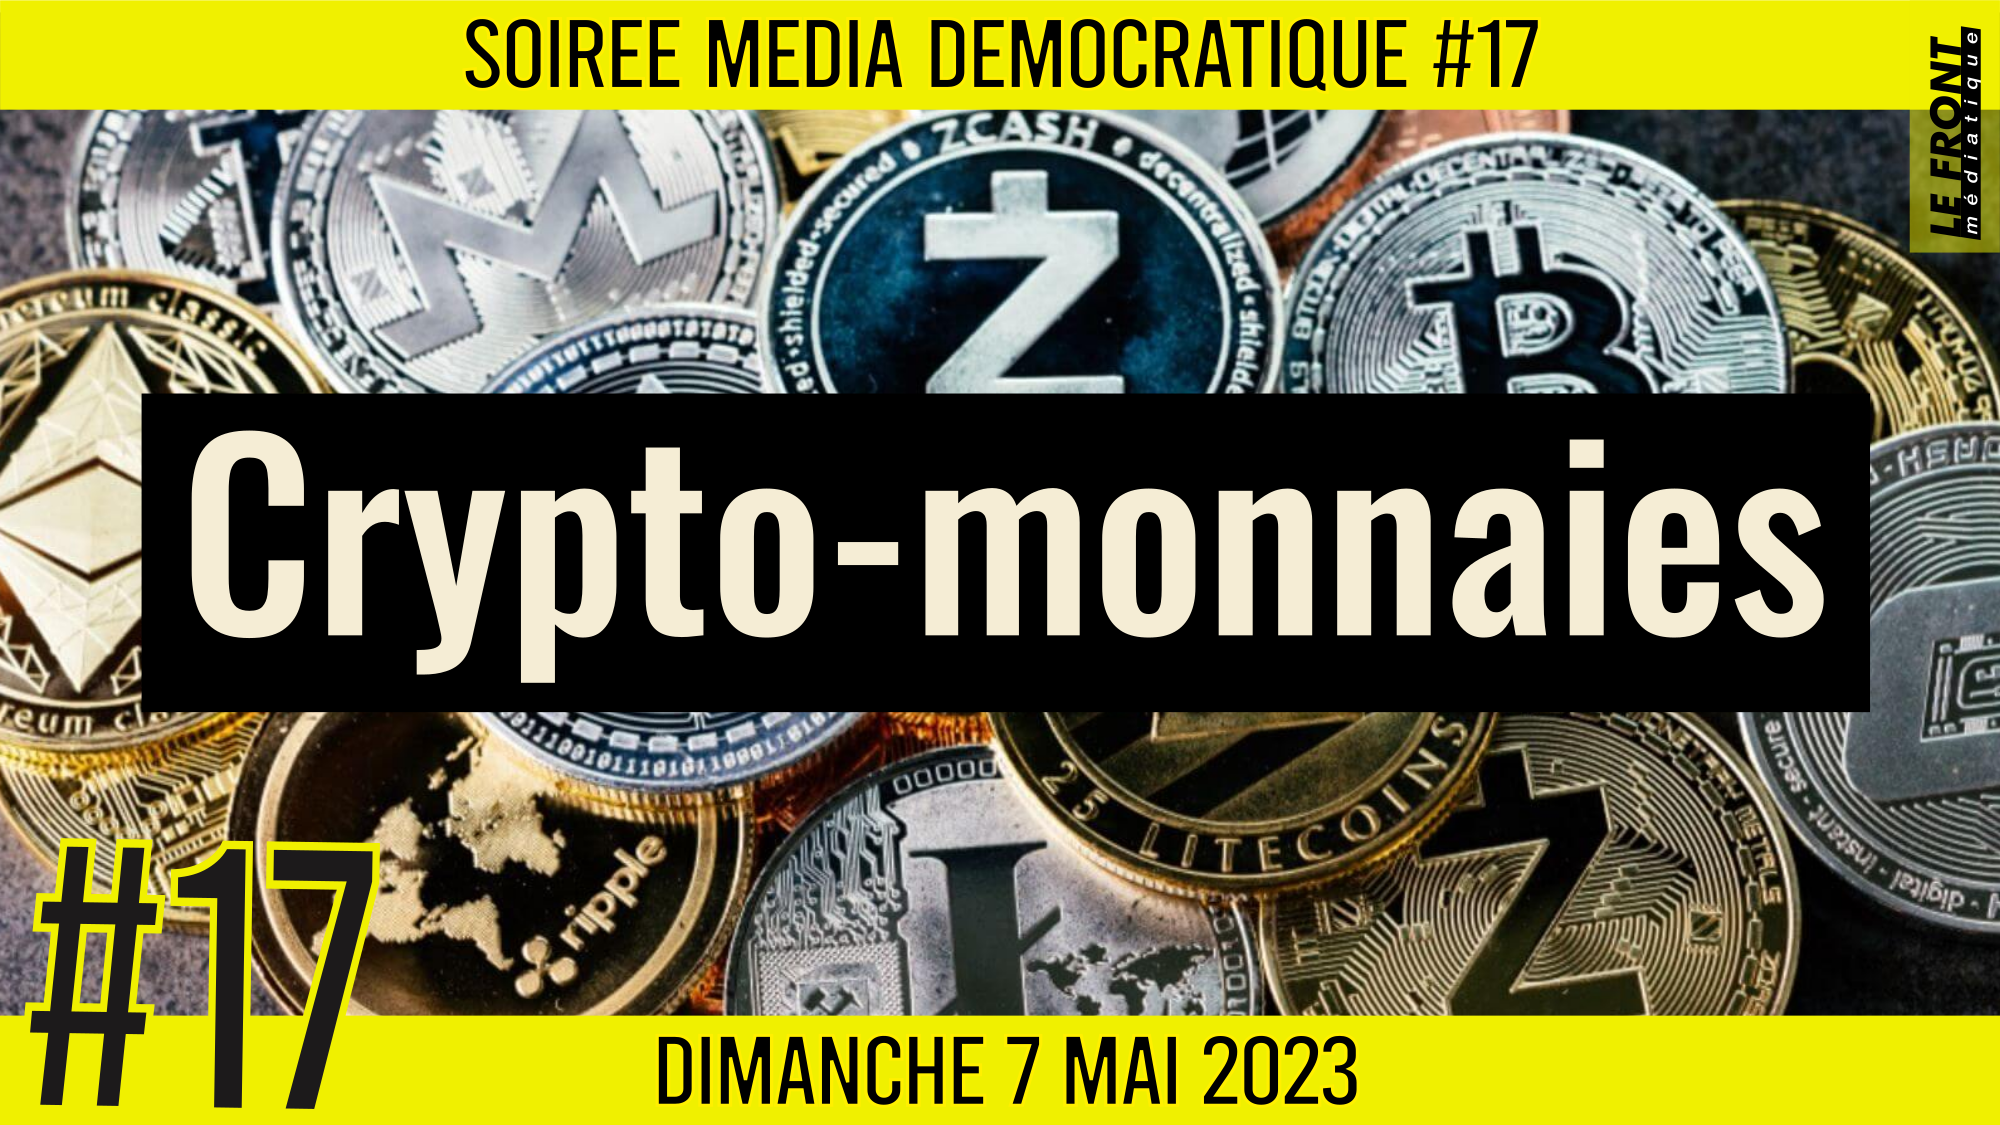 🗣 SOIRÉE MÉDIA DÉMOCRATIQUE #17 ✨ « Crypto-monnaies » 👥 6 citoyens 📆 07-05-2023